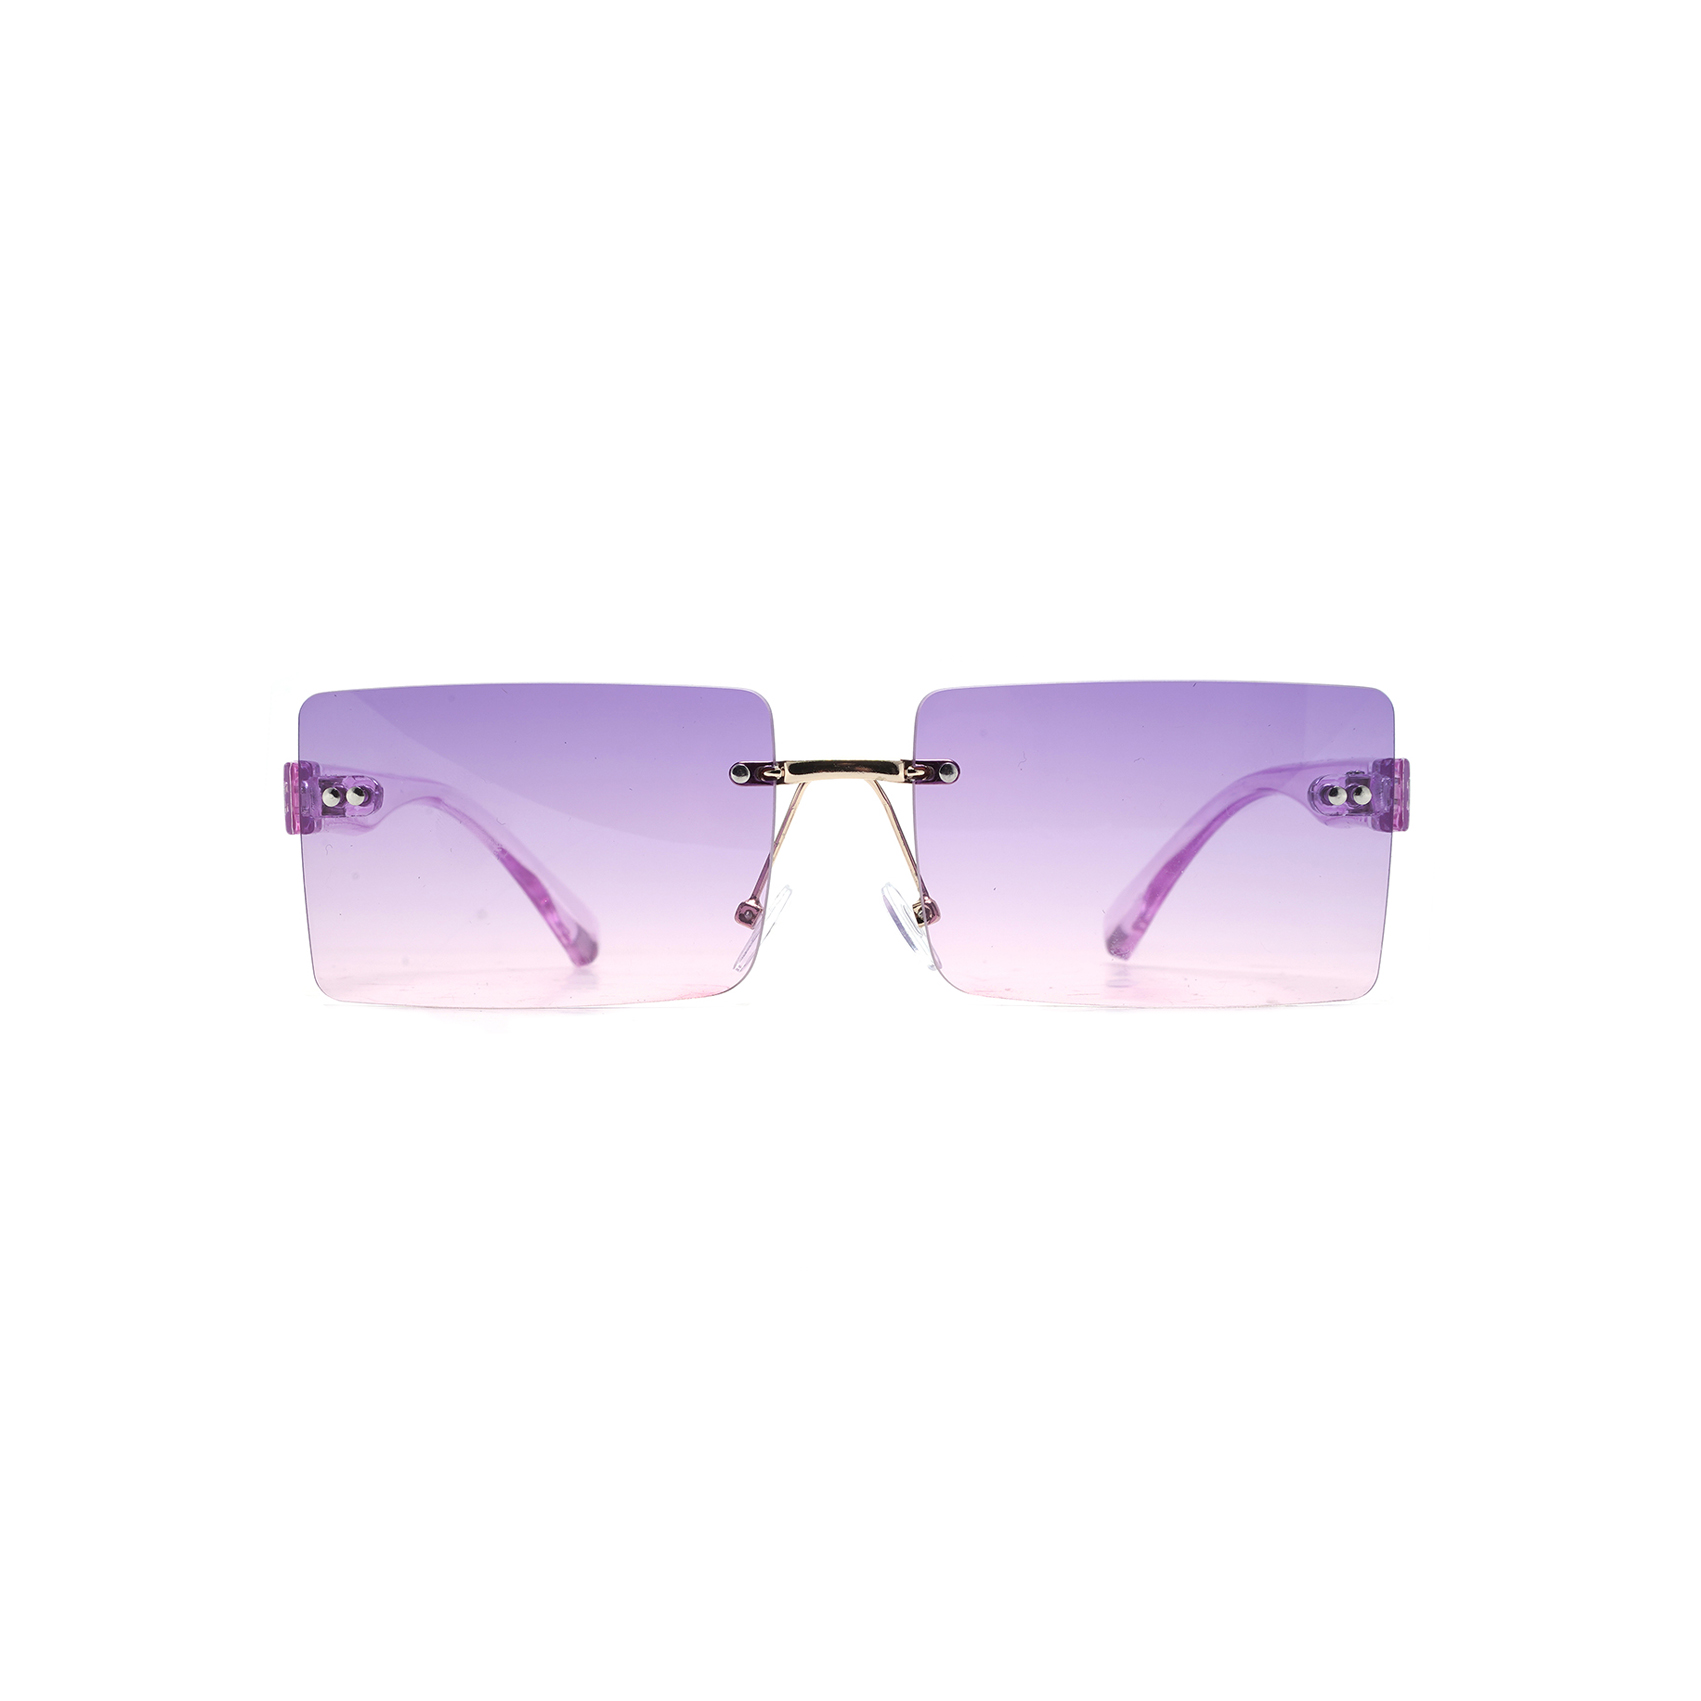 Rimless Standard Rectangular Sunglasses Fashion Sunglasses Women